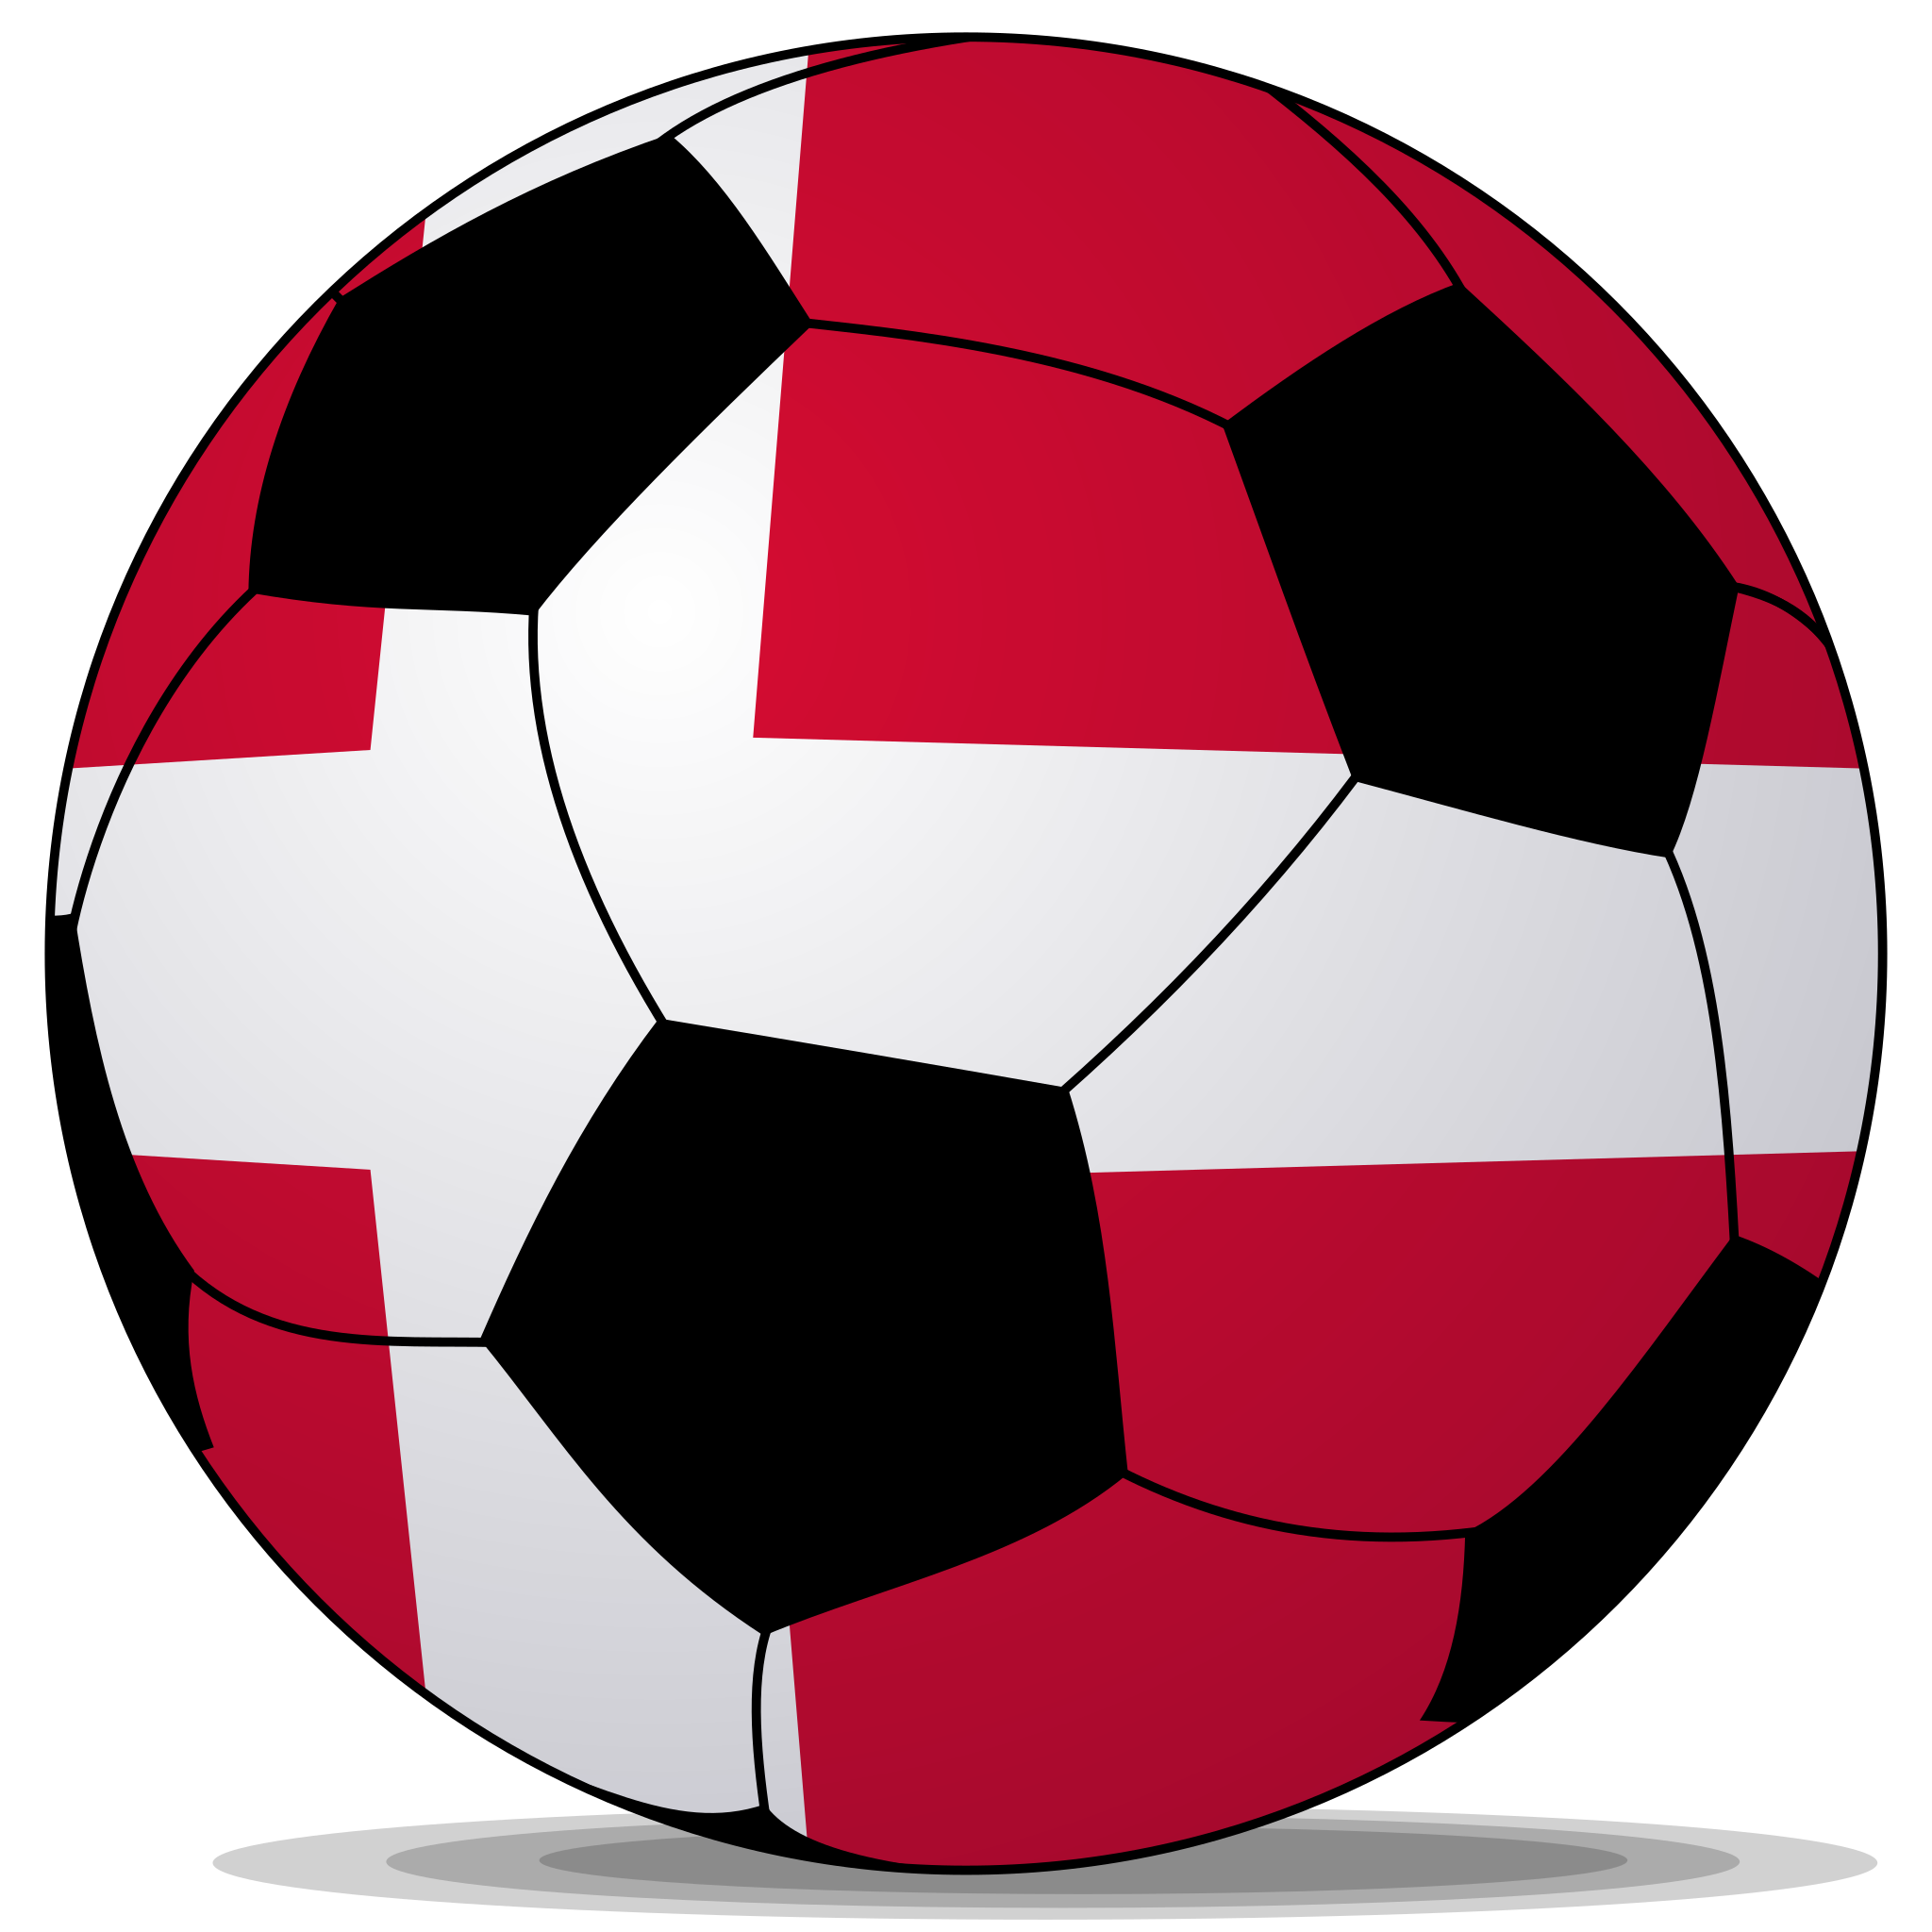 File:Soccerball Denmark.svg - Wikipedia